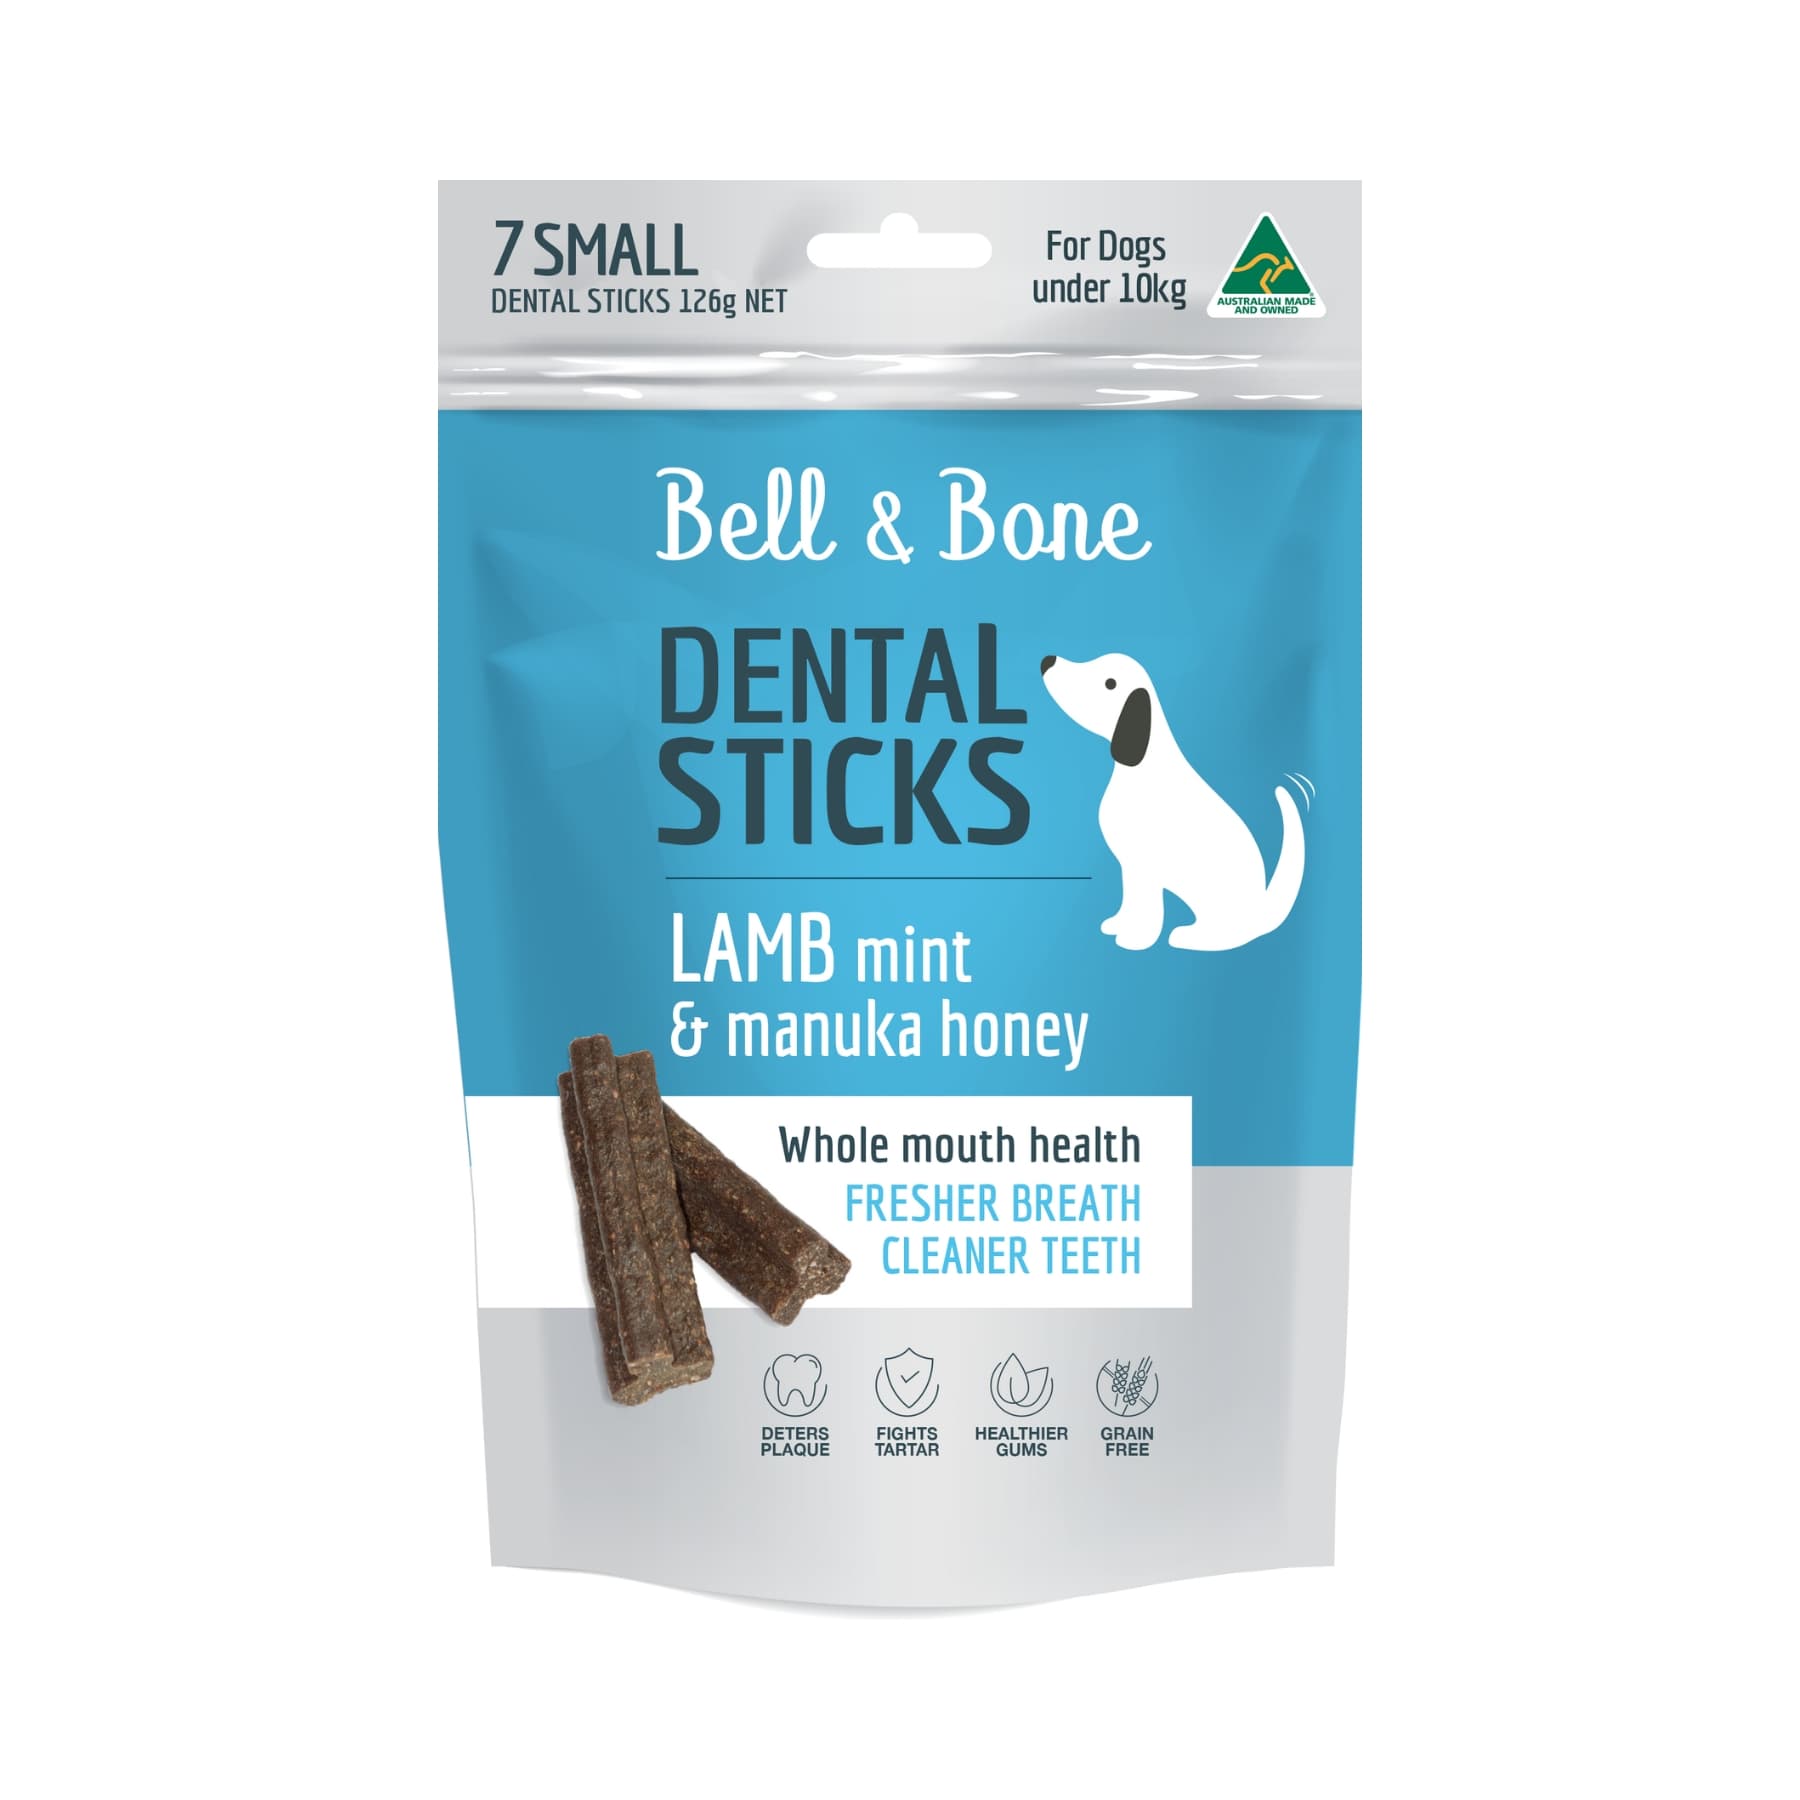 Bell & Bone Dental Sticks Lamb, Mint & Manuka Honey Small. Australian Made Dental Treats for Dogs.